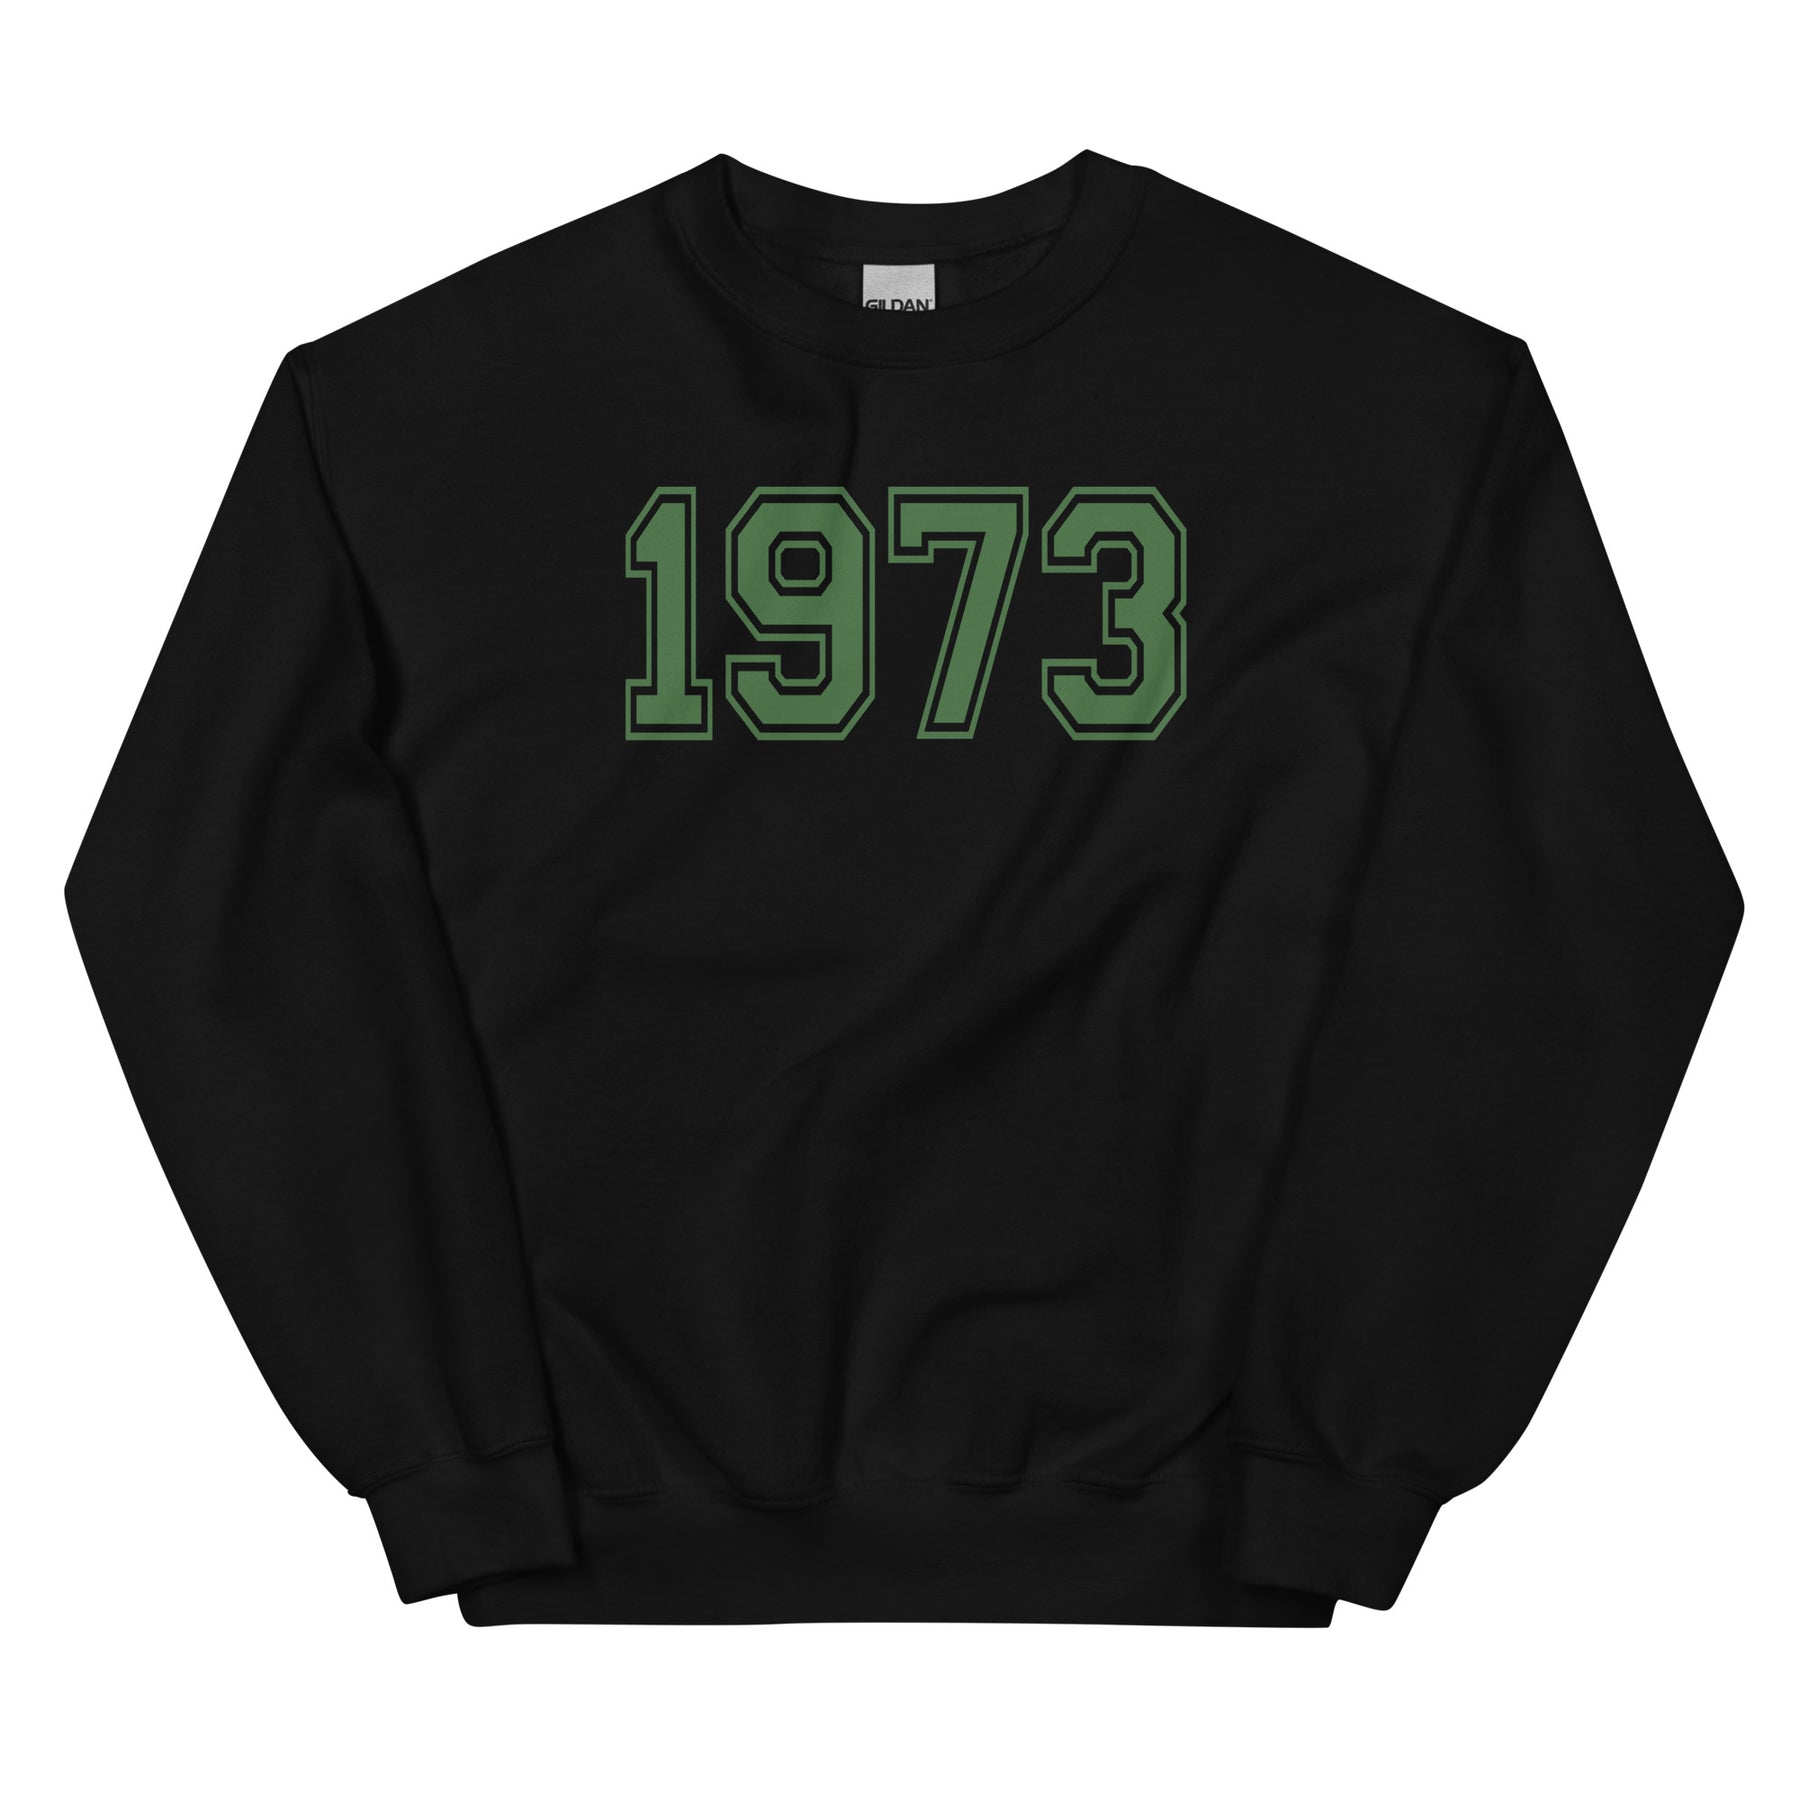 1973 Collegiate Sweatshirt | Roe v Wade